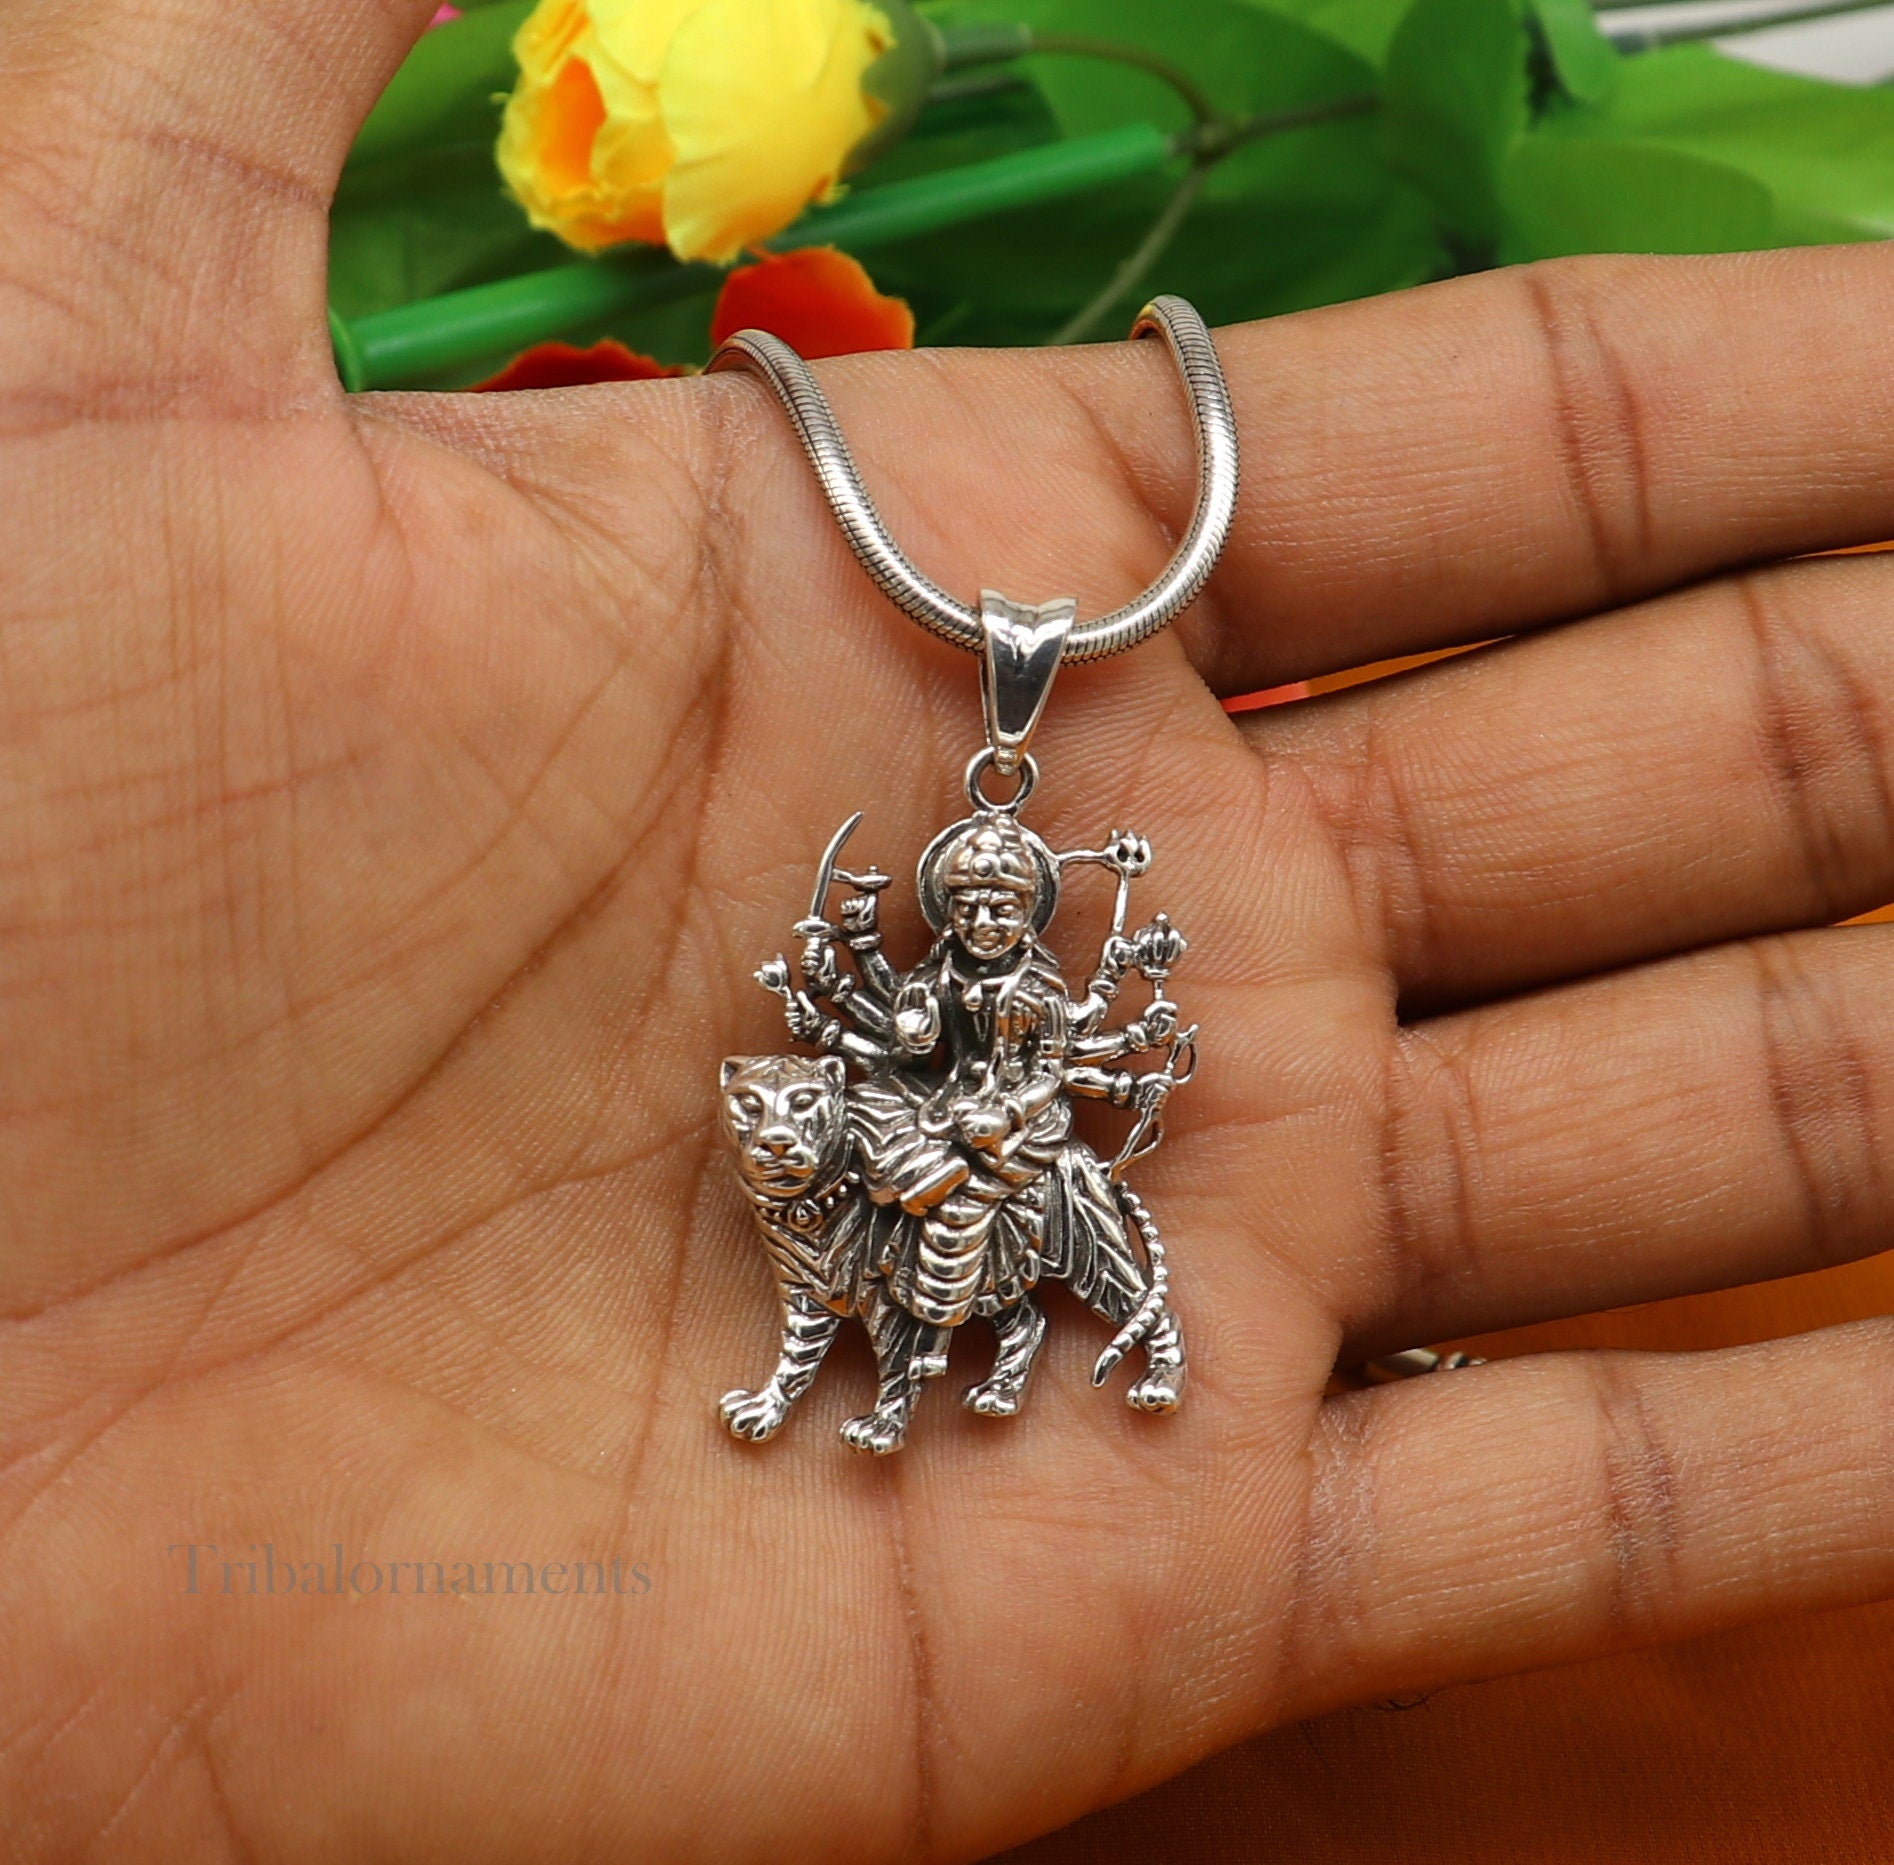 Divine 925 sterling silver Goddess bhawani/ Durga mataji with lion pendant, amazing unisex pendant locket goddess tribal jewelry ssp896 - TRIBAL ORNAMENTS